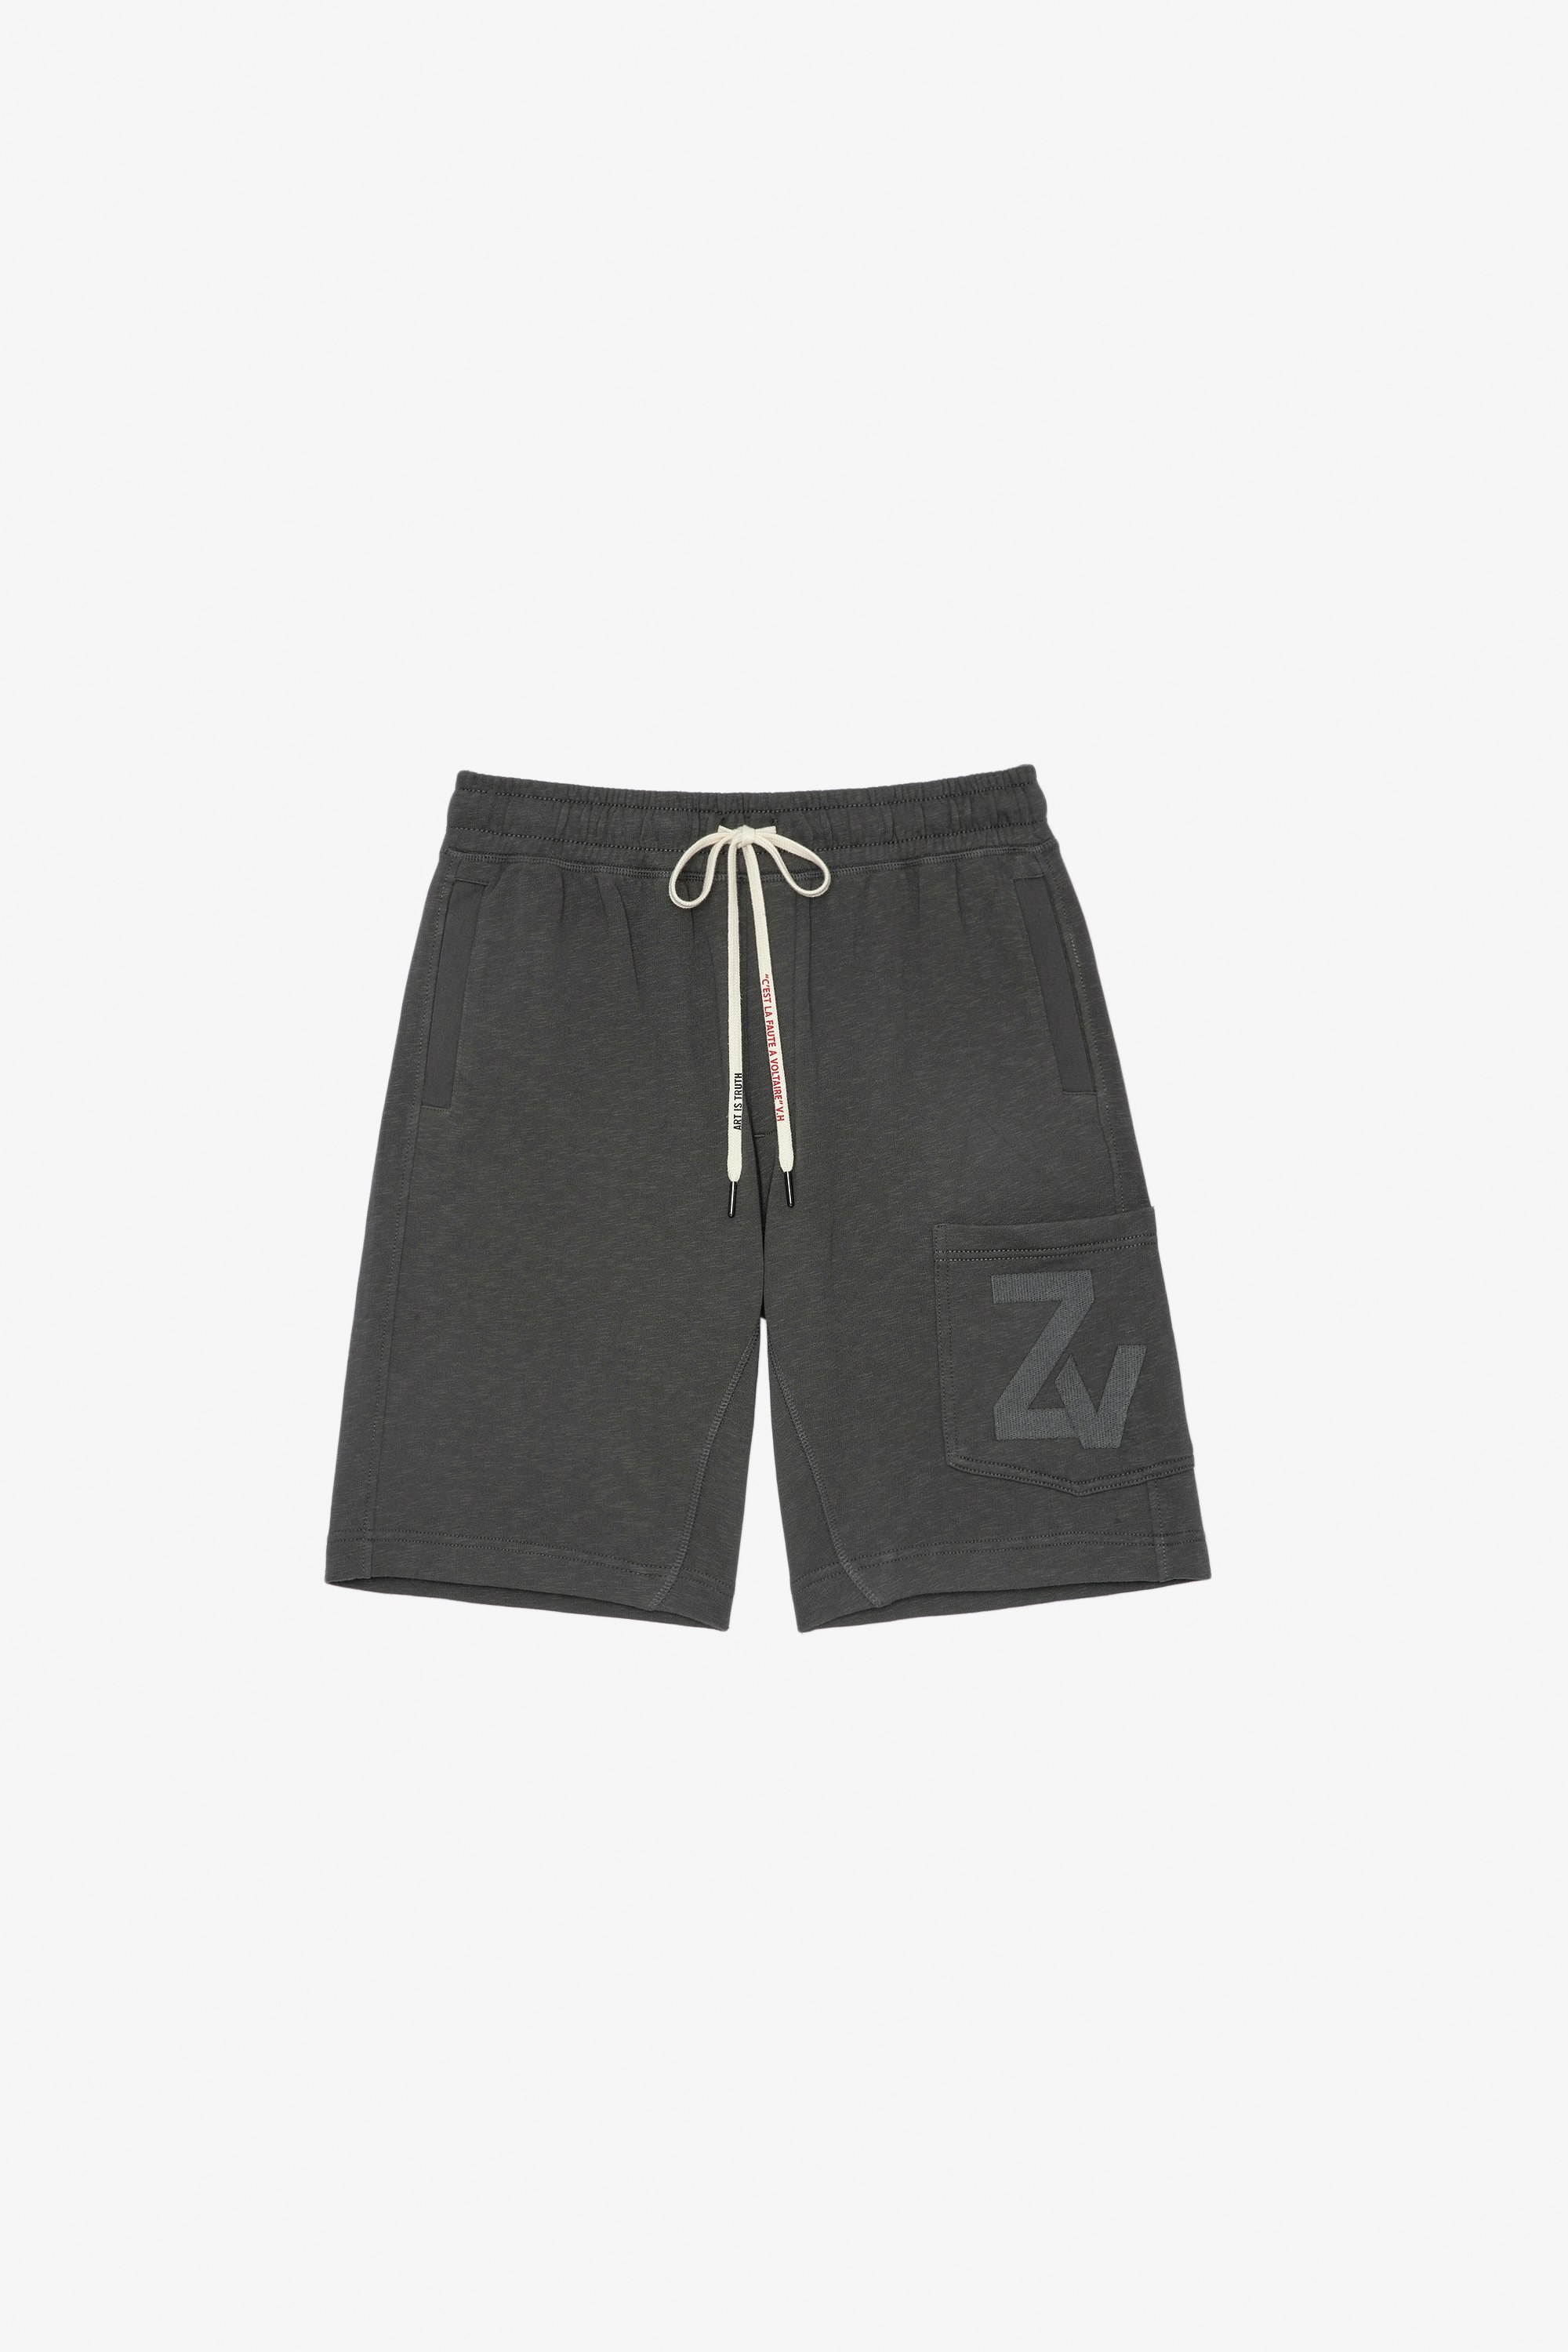 Parker Shorts Men's shorts in beige cotton fleece with ZV signature